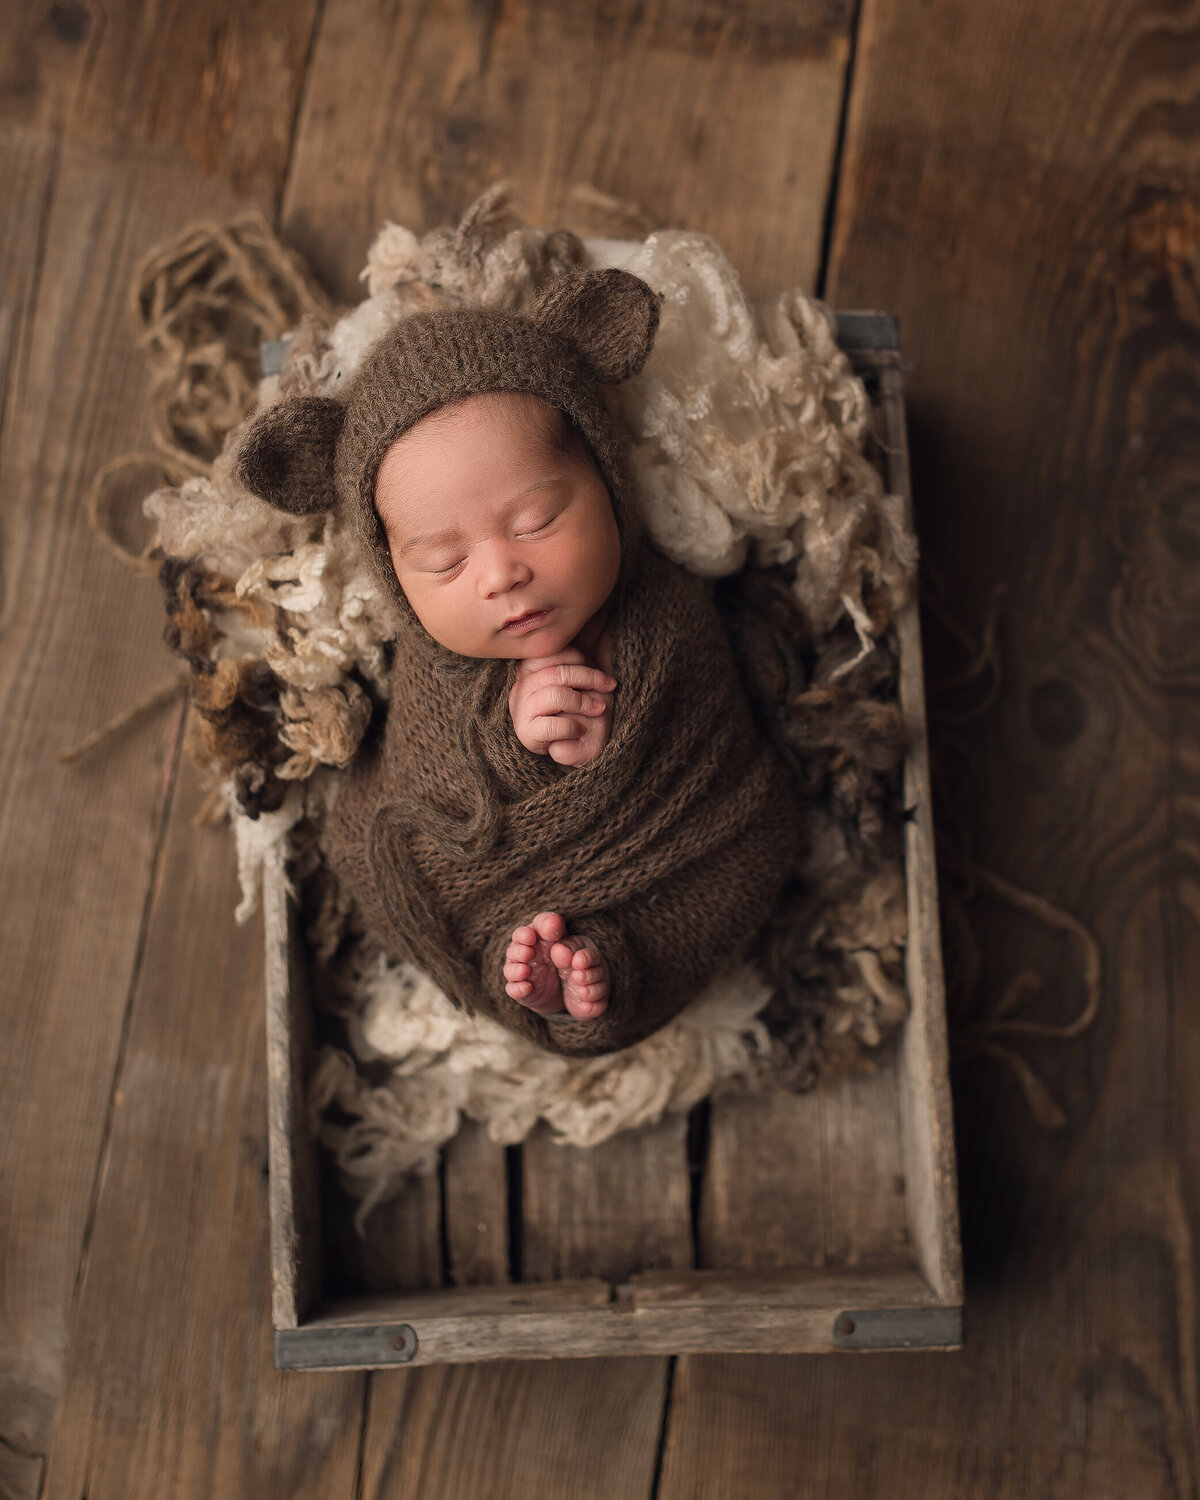 Sleeping bear newborn props, by Katie Anne